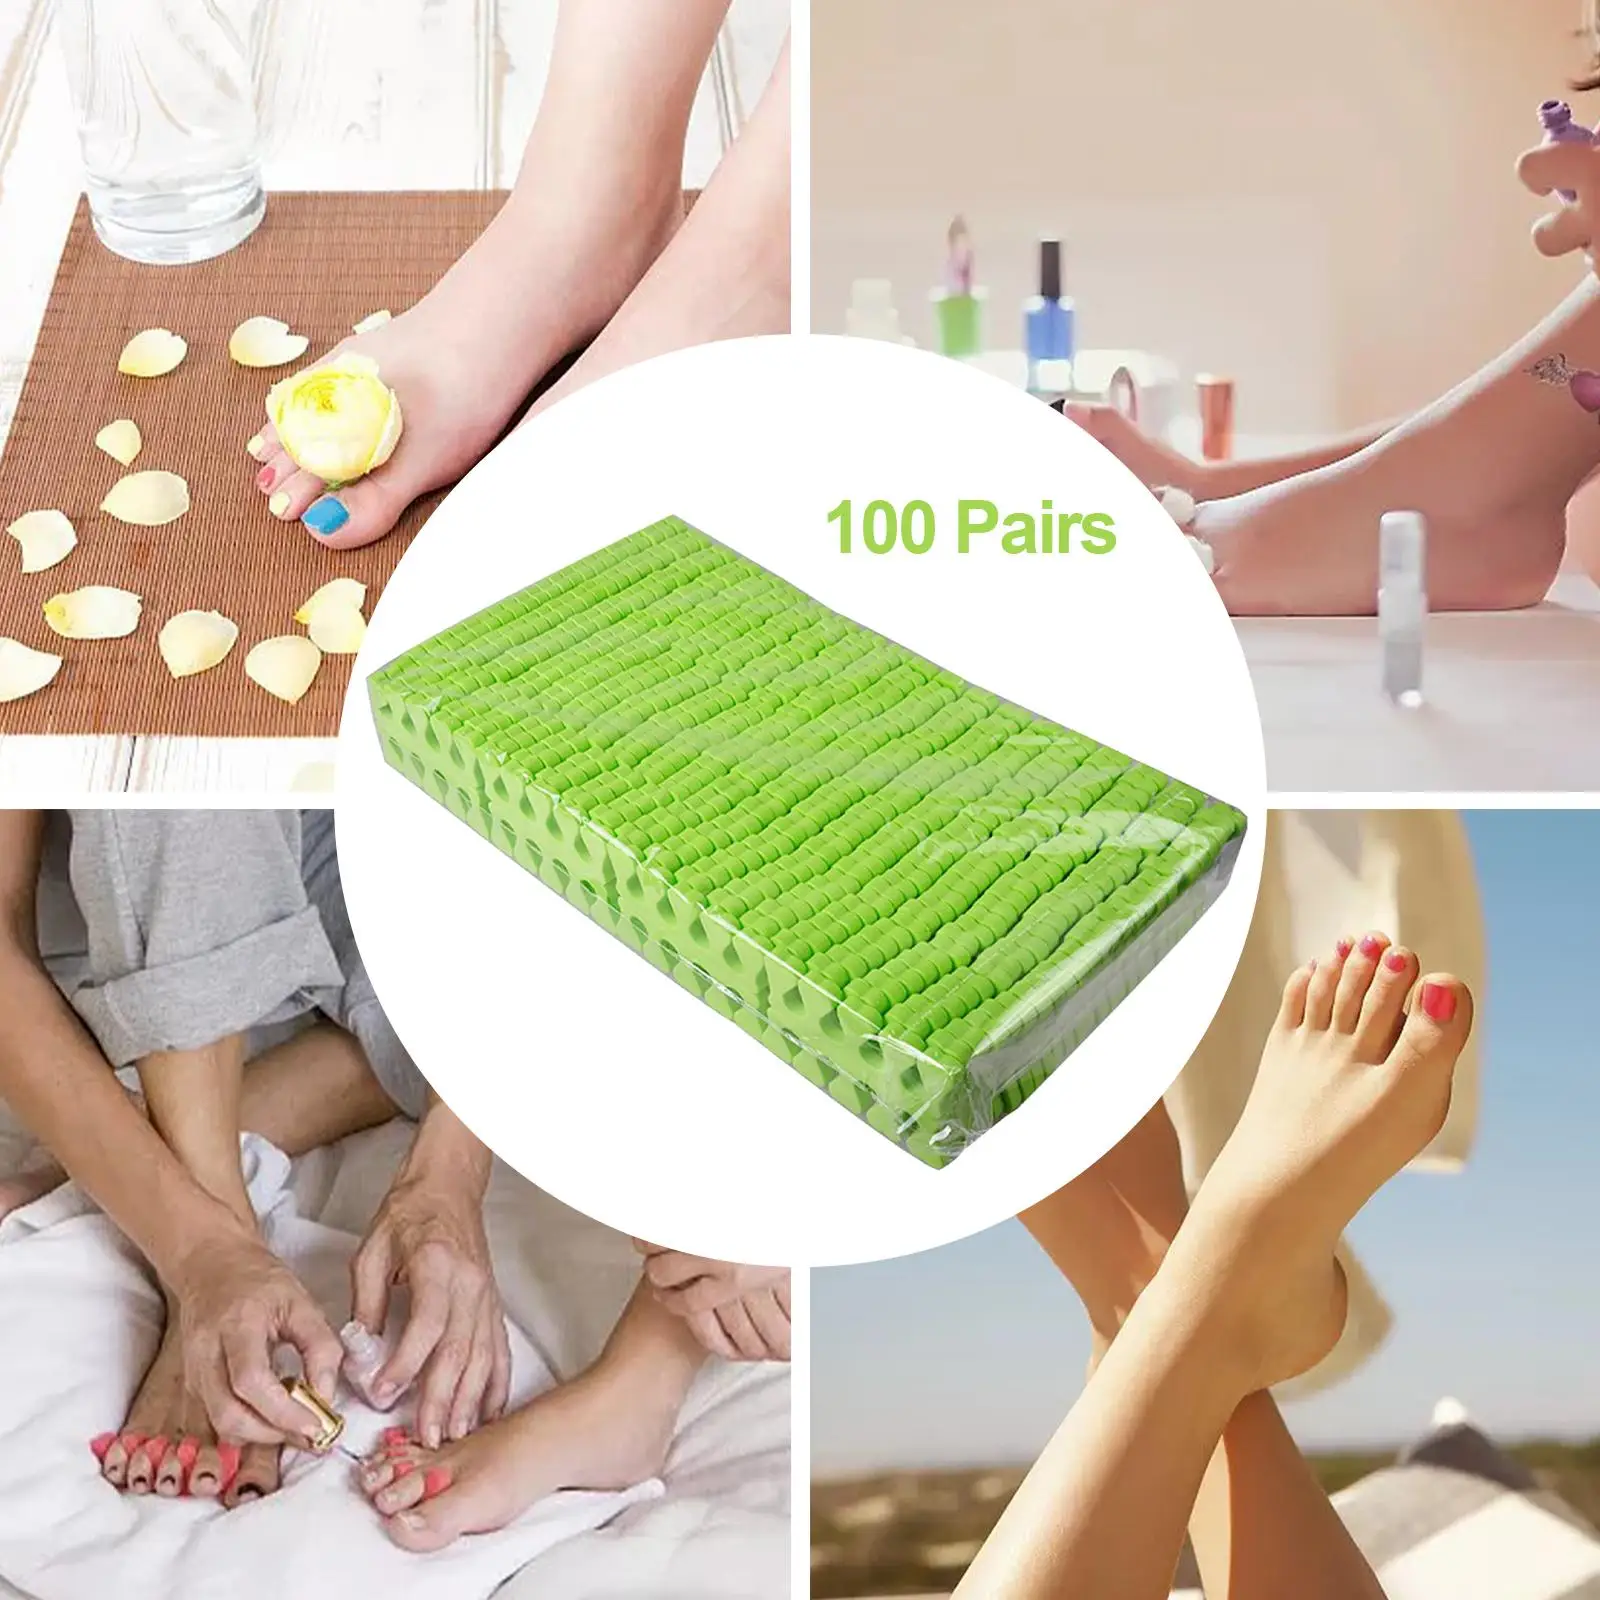  Toe Separator Soft Sponge Practical for Manicure Home Use 200Pcs